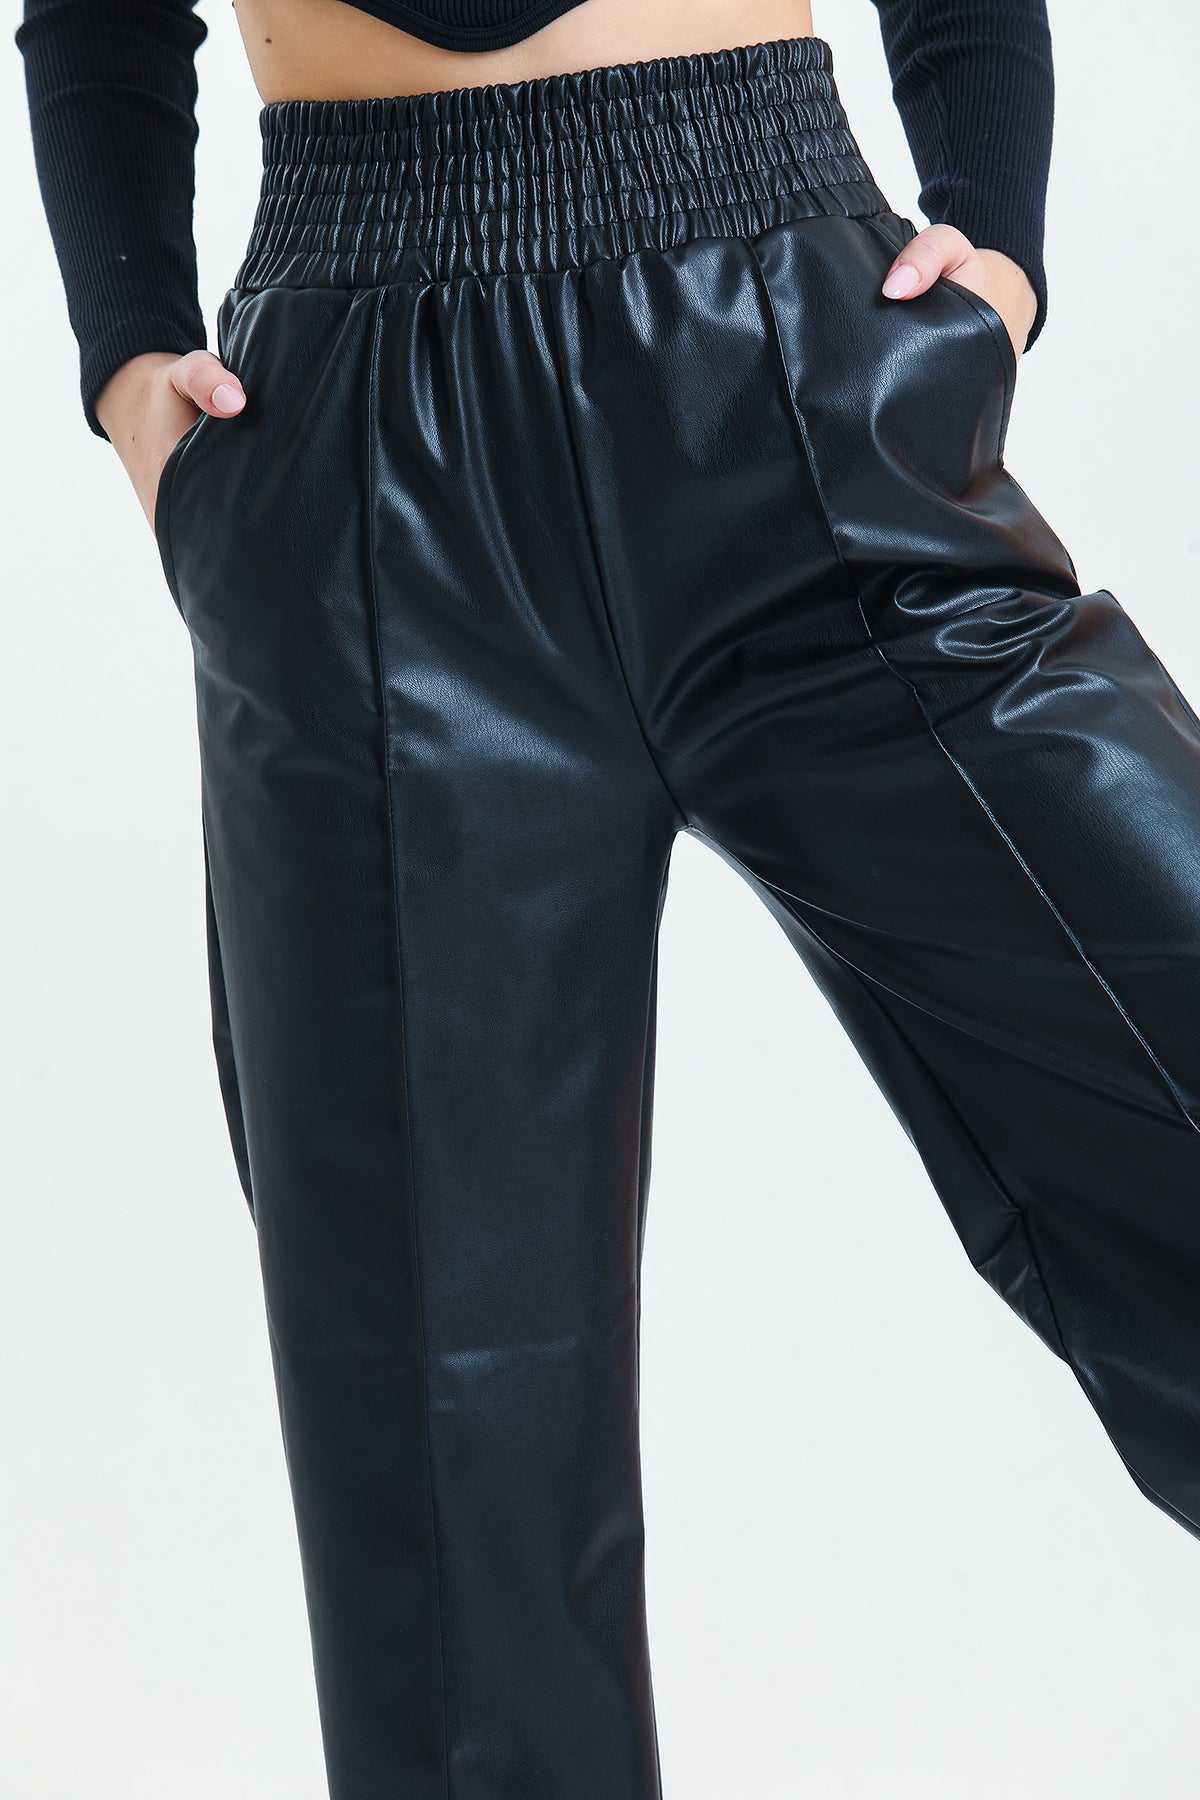 Black Spanish trotter ribbon Ironing track, waist krotea rubber artificial leather women pants